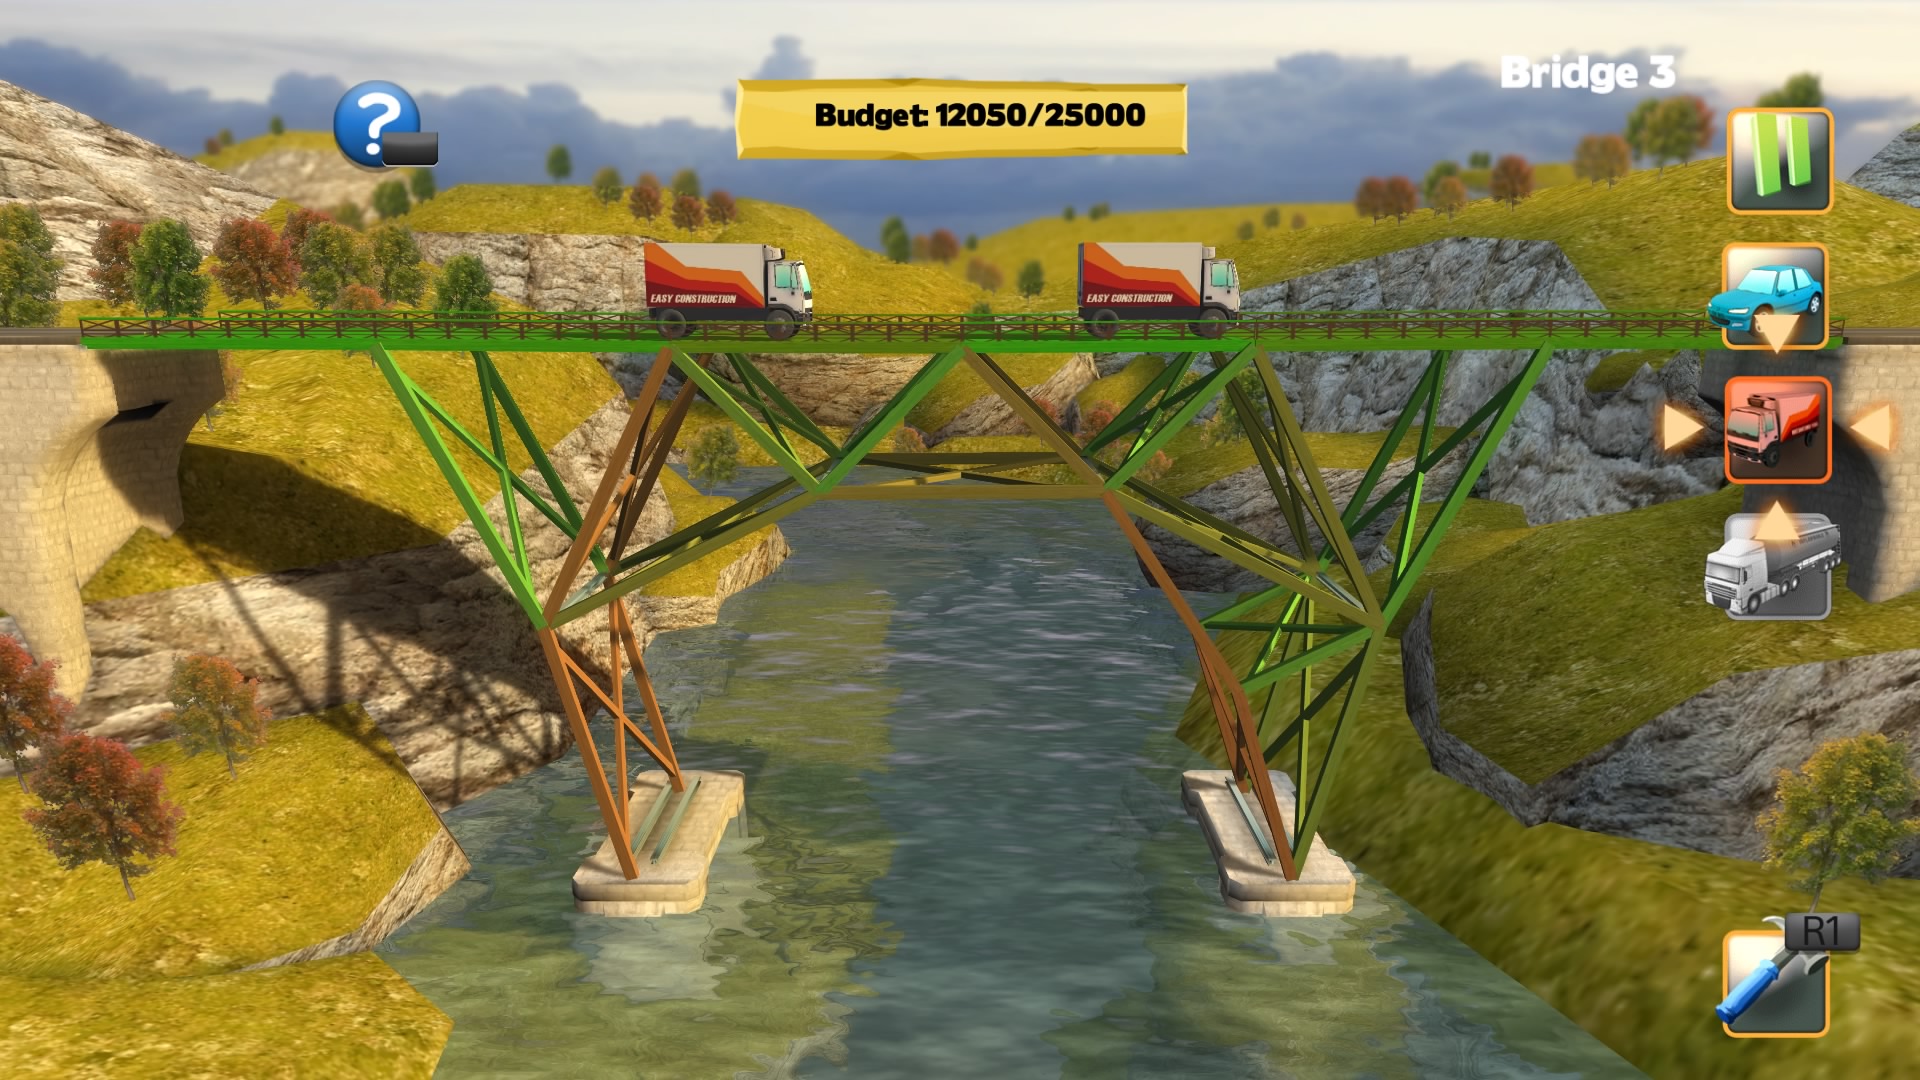 bridge constructor portal physical release